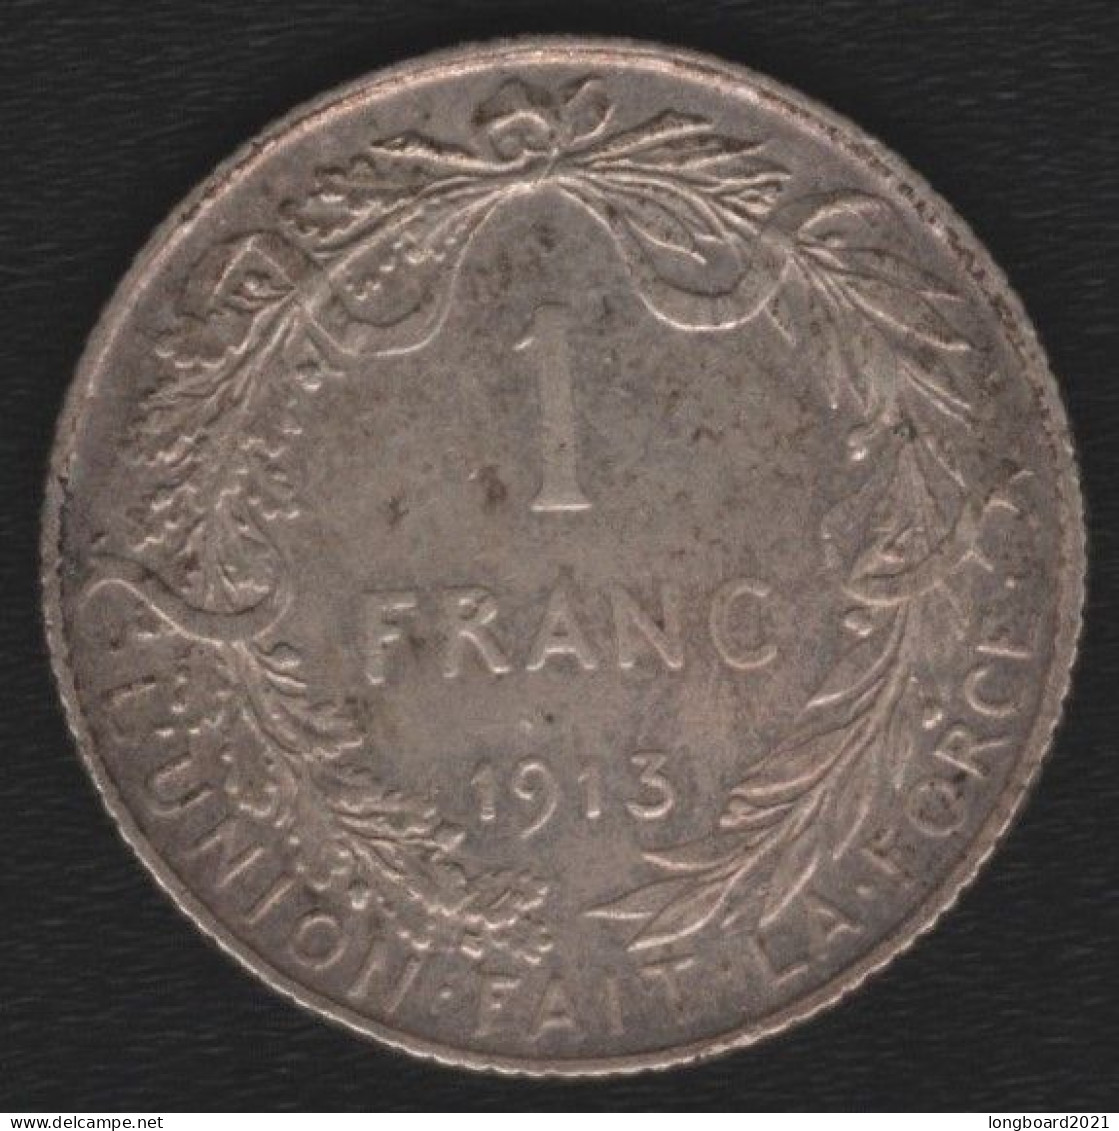 BELGIUM - 1 FRANC 1913 French -SILVER- - 1 Franco